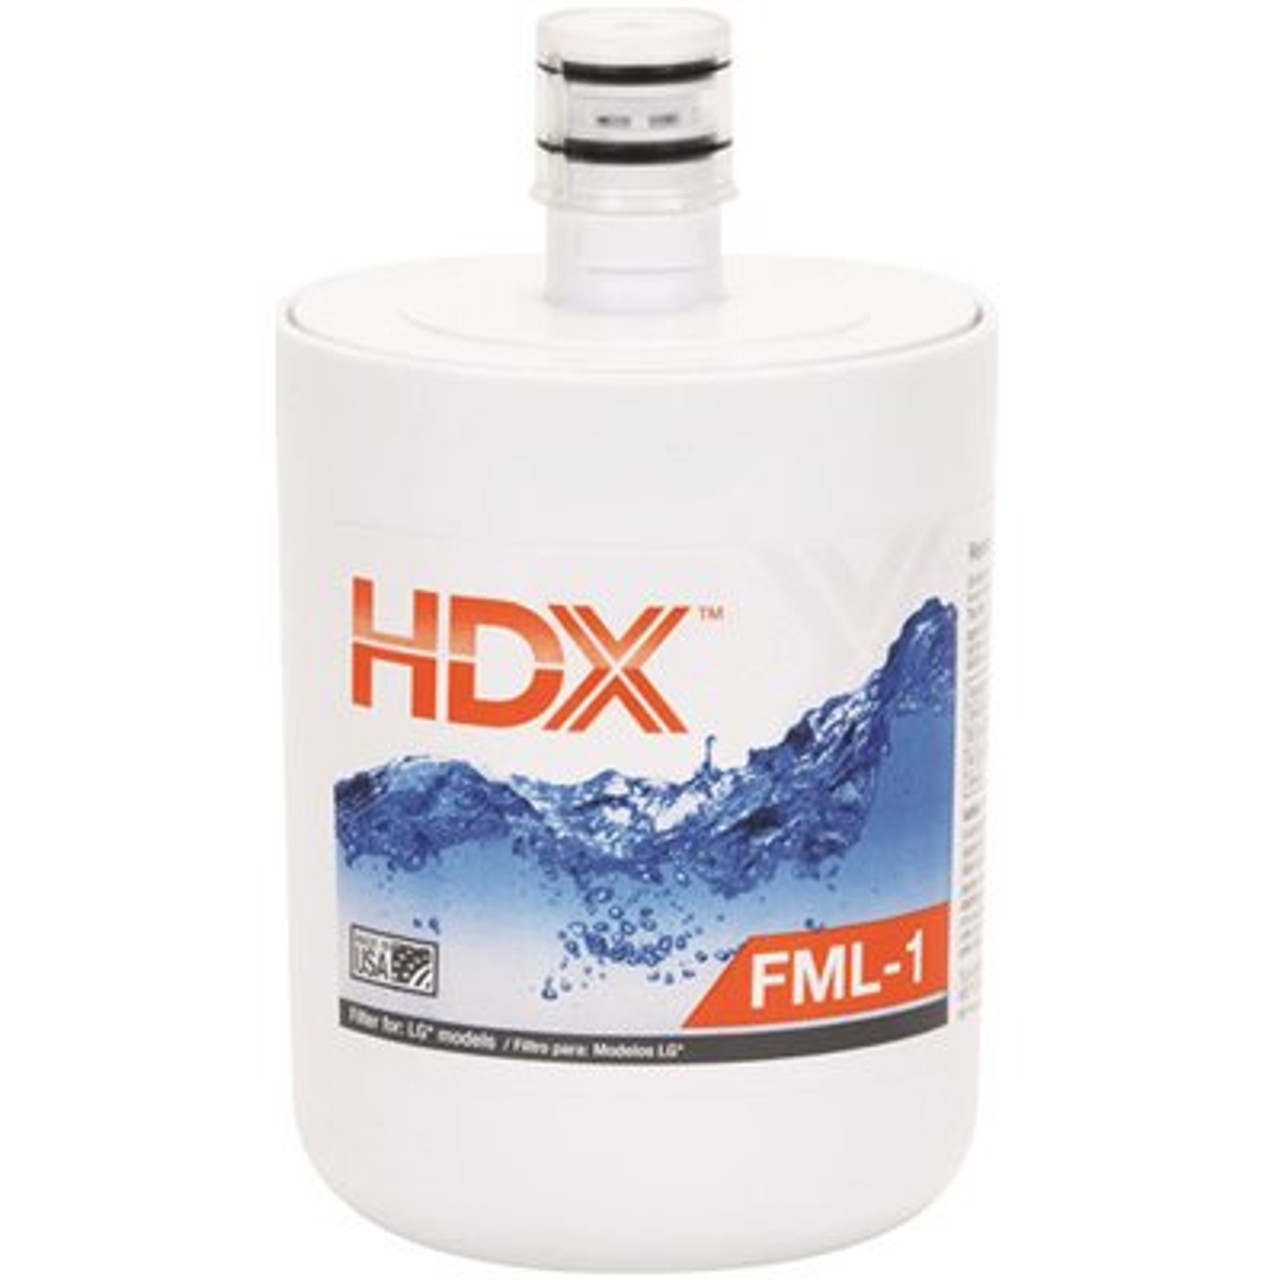 Hdx Fml-1 Premium Refrigerator Replacement Filter Fits Lg Lt500P